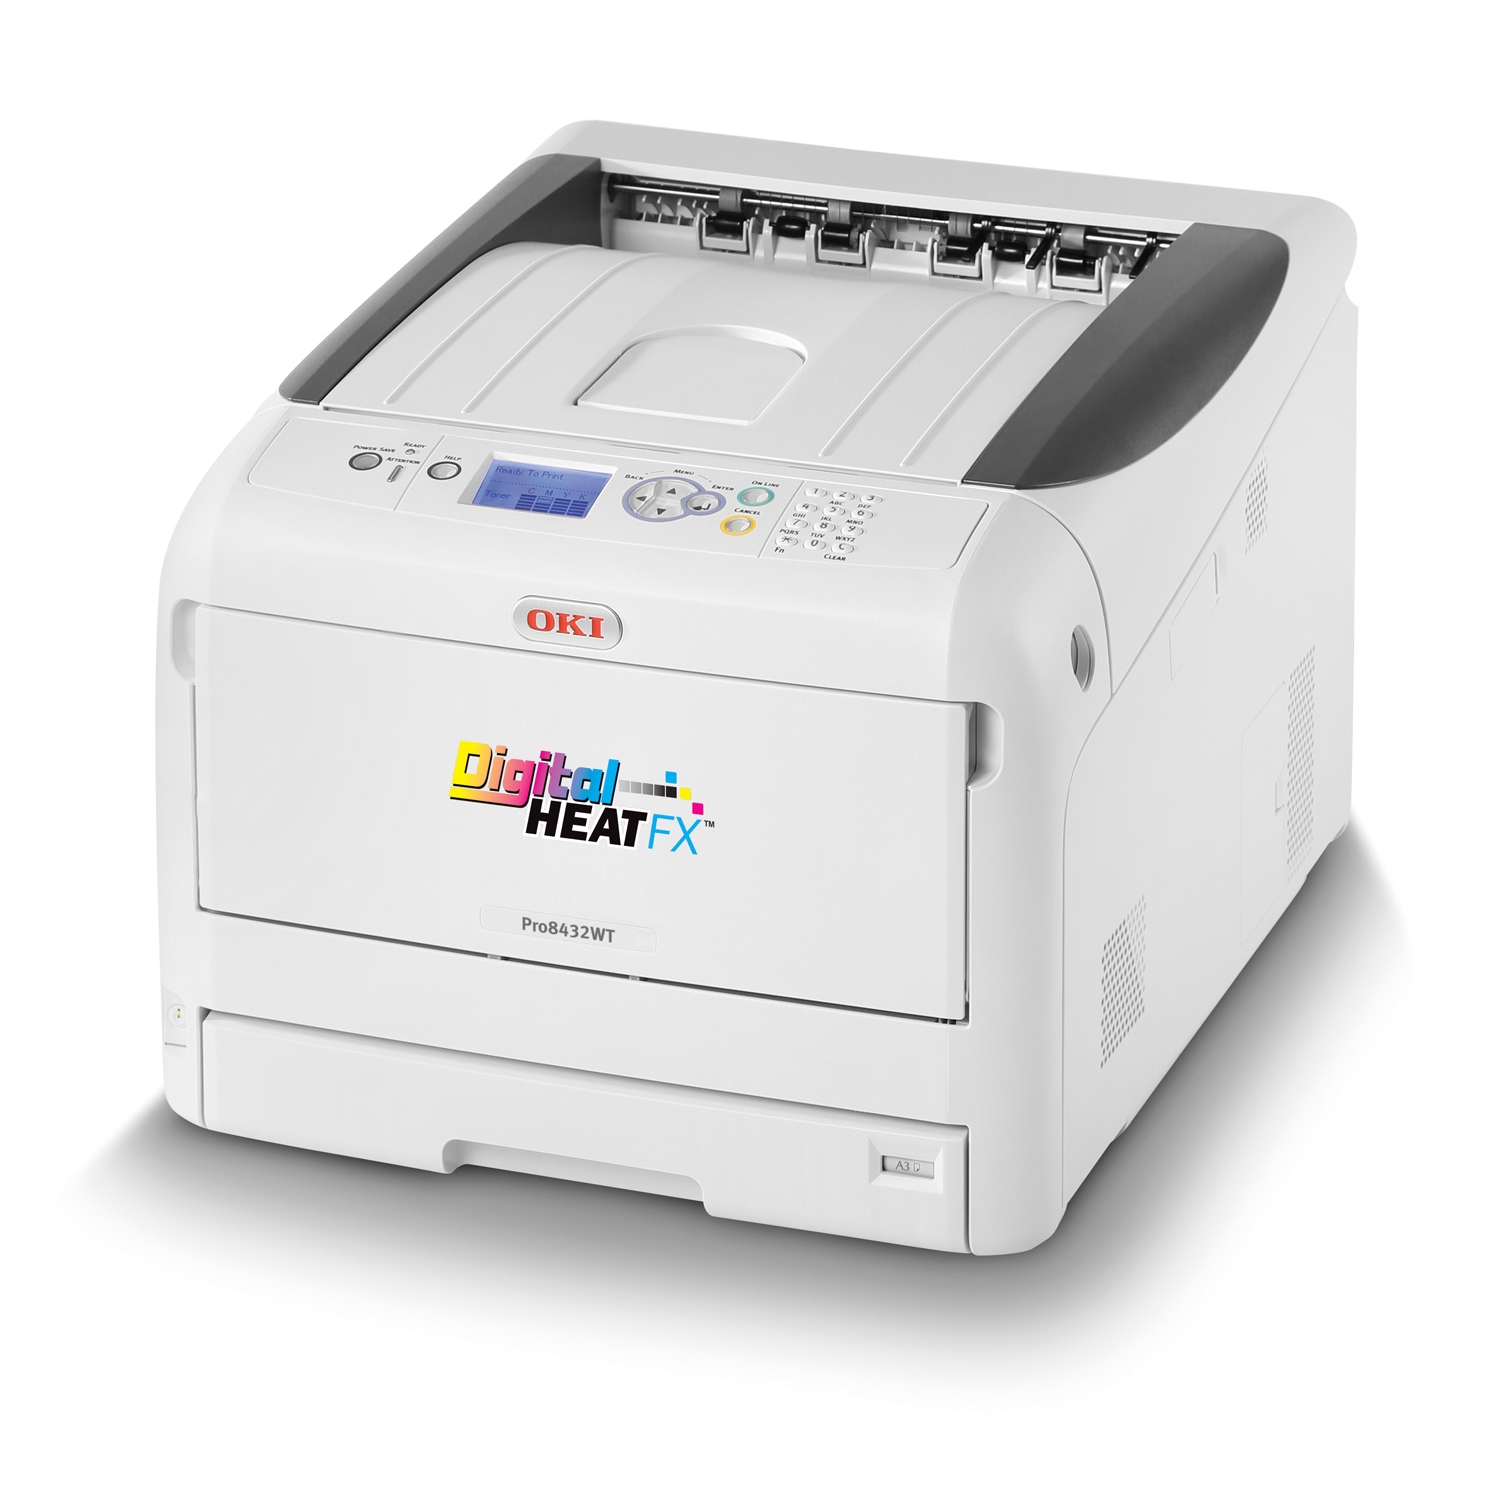 oki-pro8432wt-toner-printer-colman-and-company